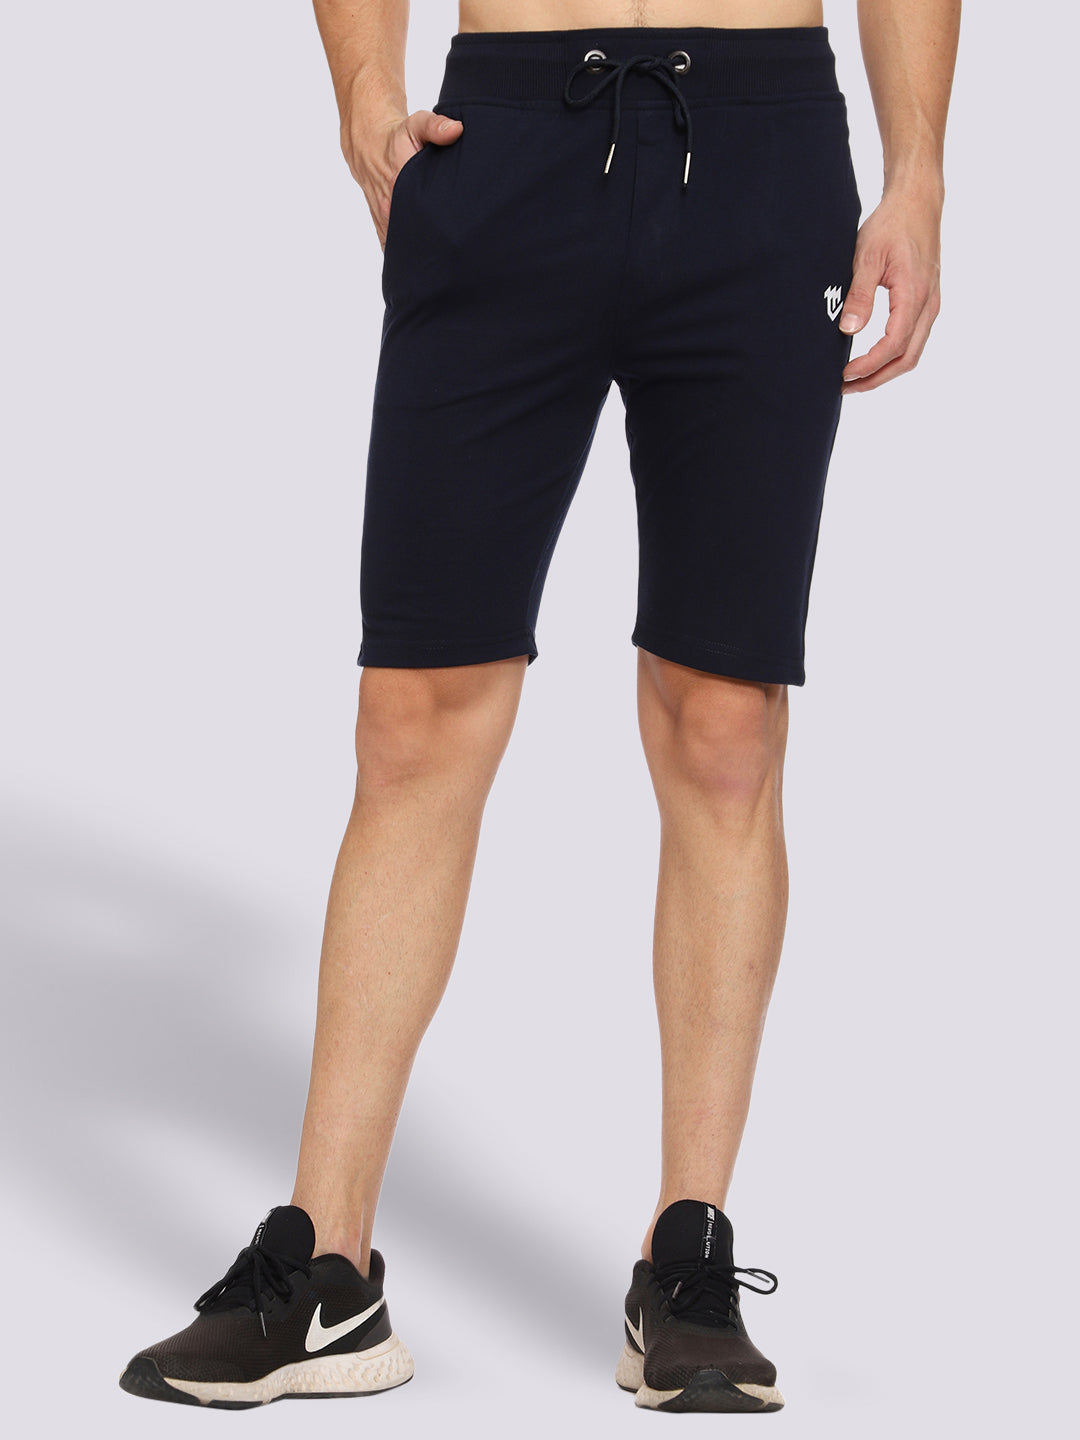 Navy Blue Shorts For Men